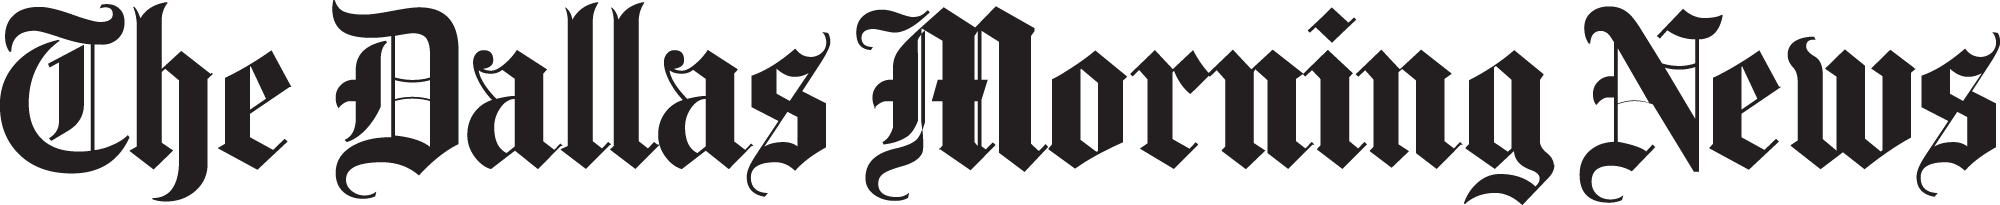 Dallas Morning News logo (black).png